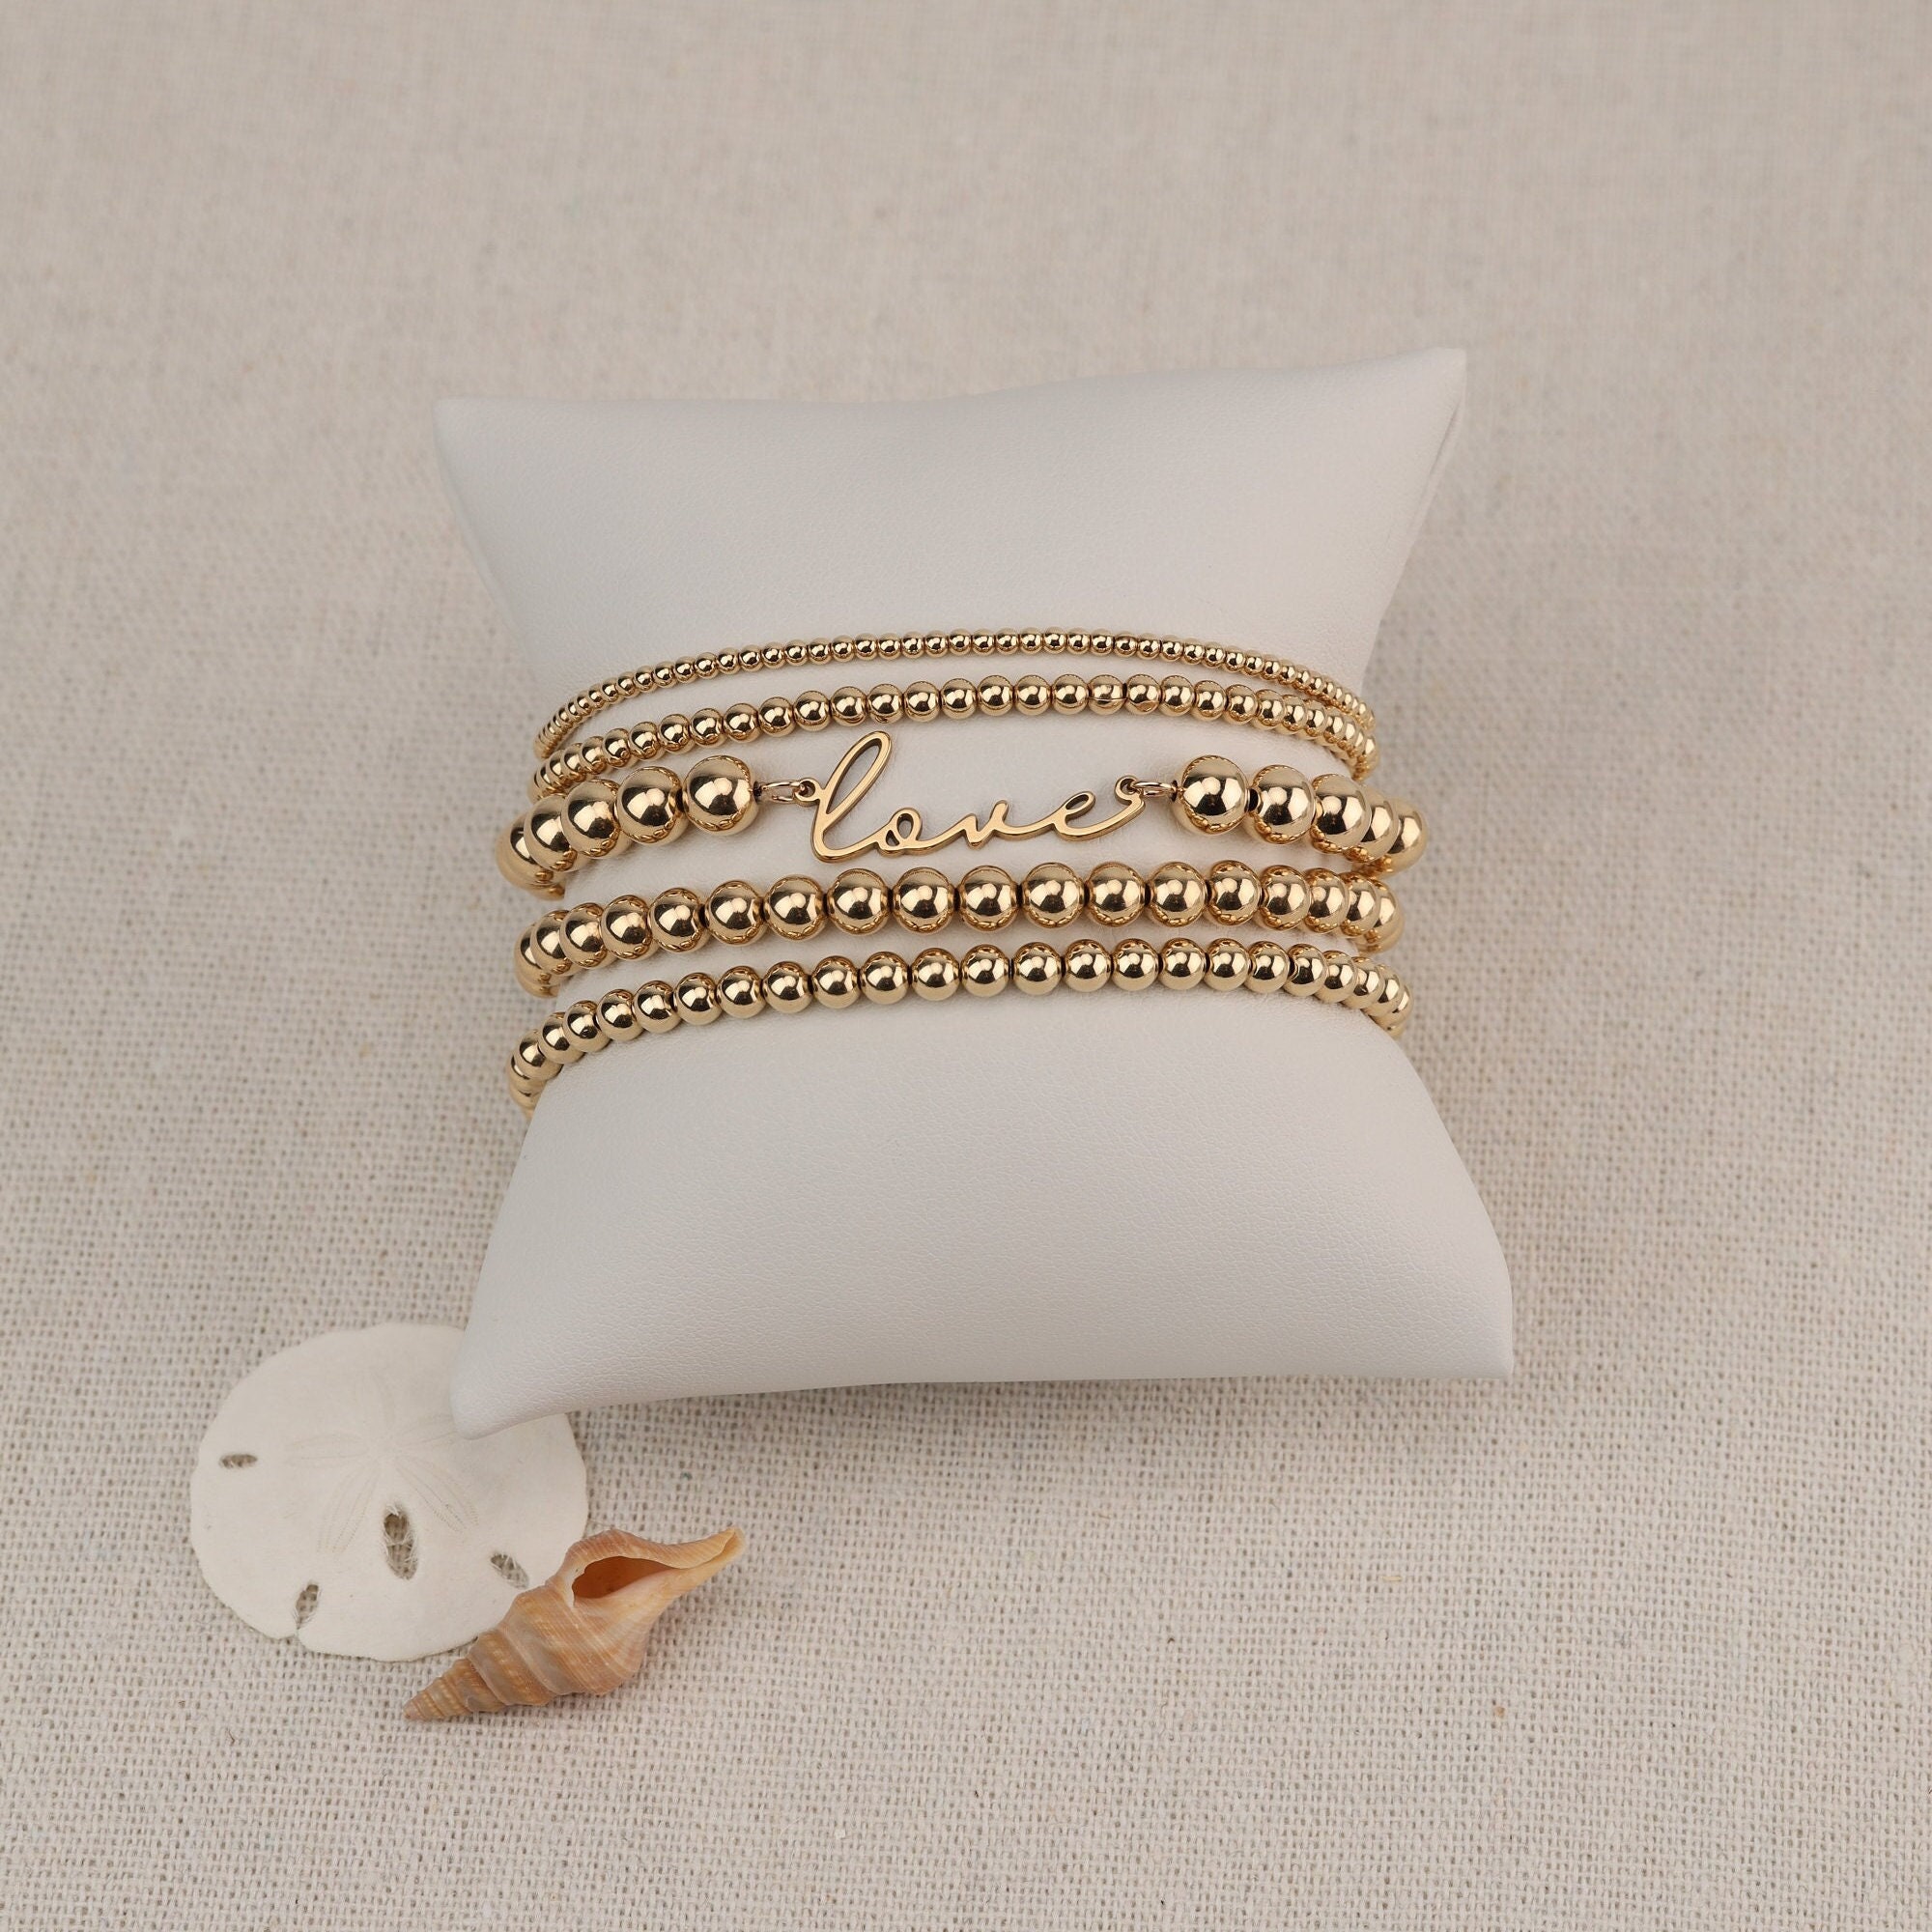 Personalized Women's Cuff Bracelet: Gift/Send Jewellery Gifts Online  JVS1201435 |IGP.com